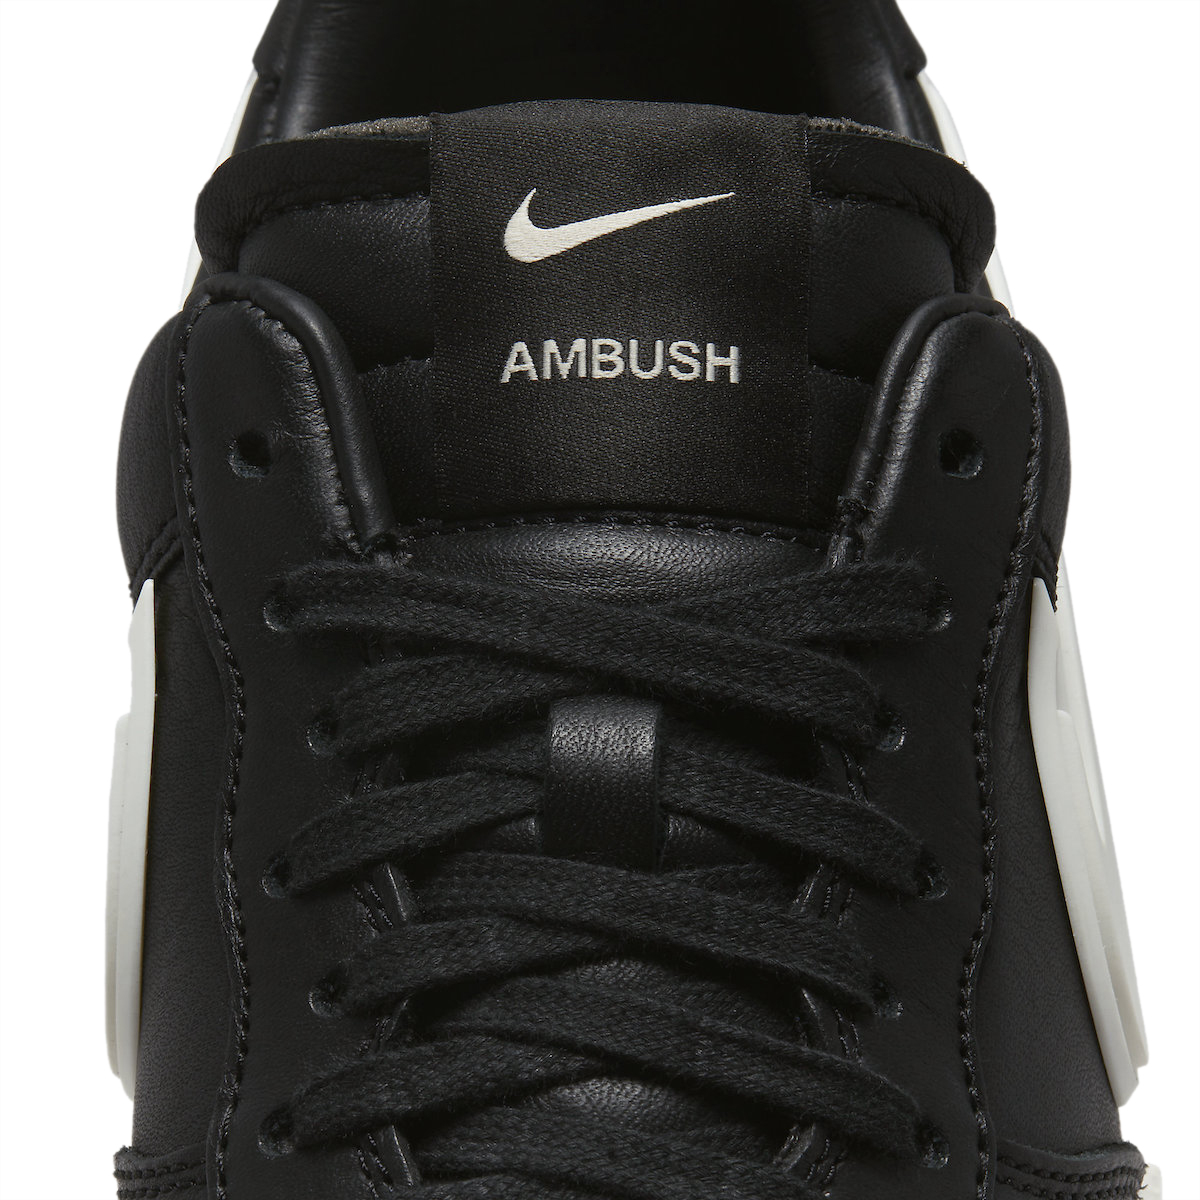 AMBUSH x Nike Air Force 1 Low Black DV3464-001